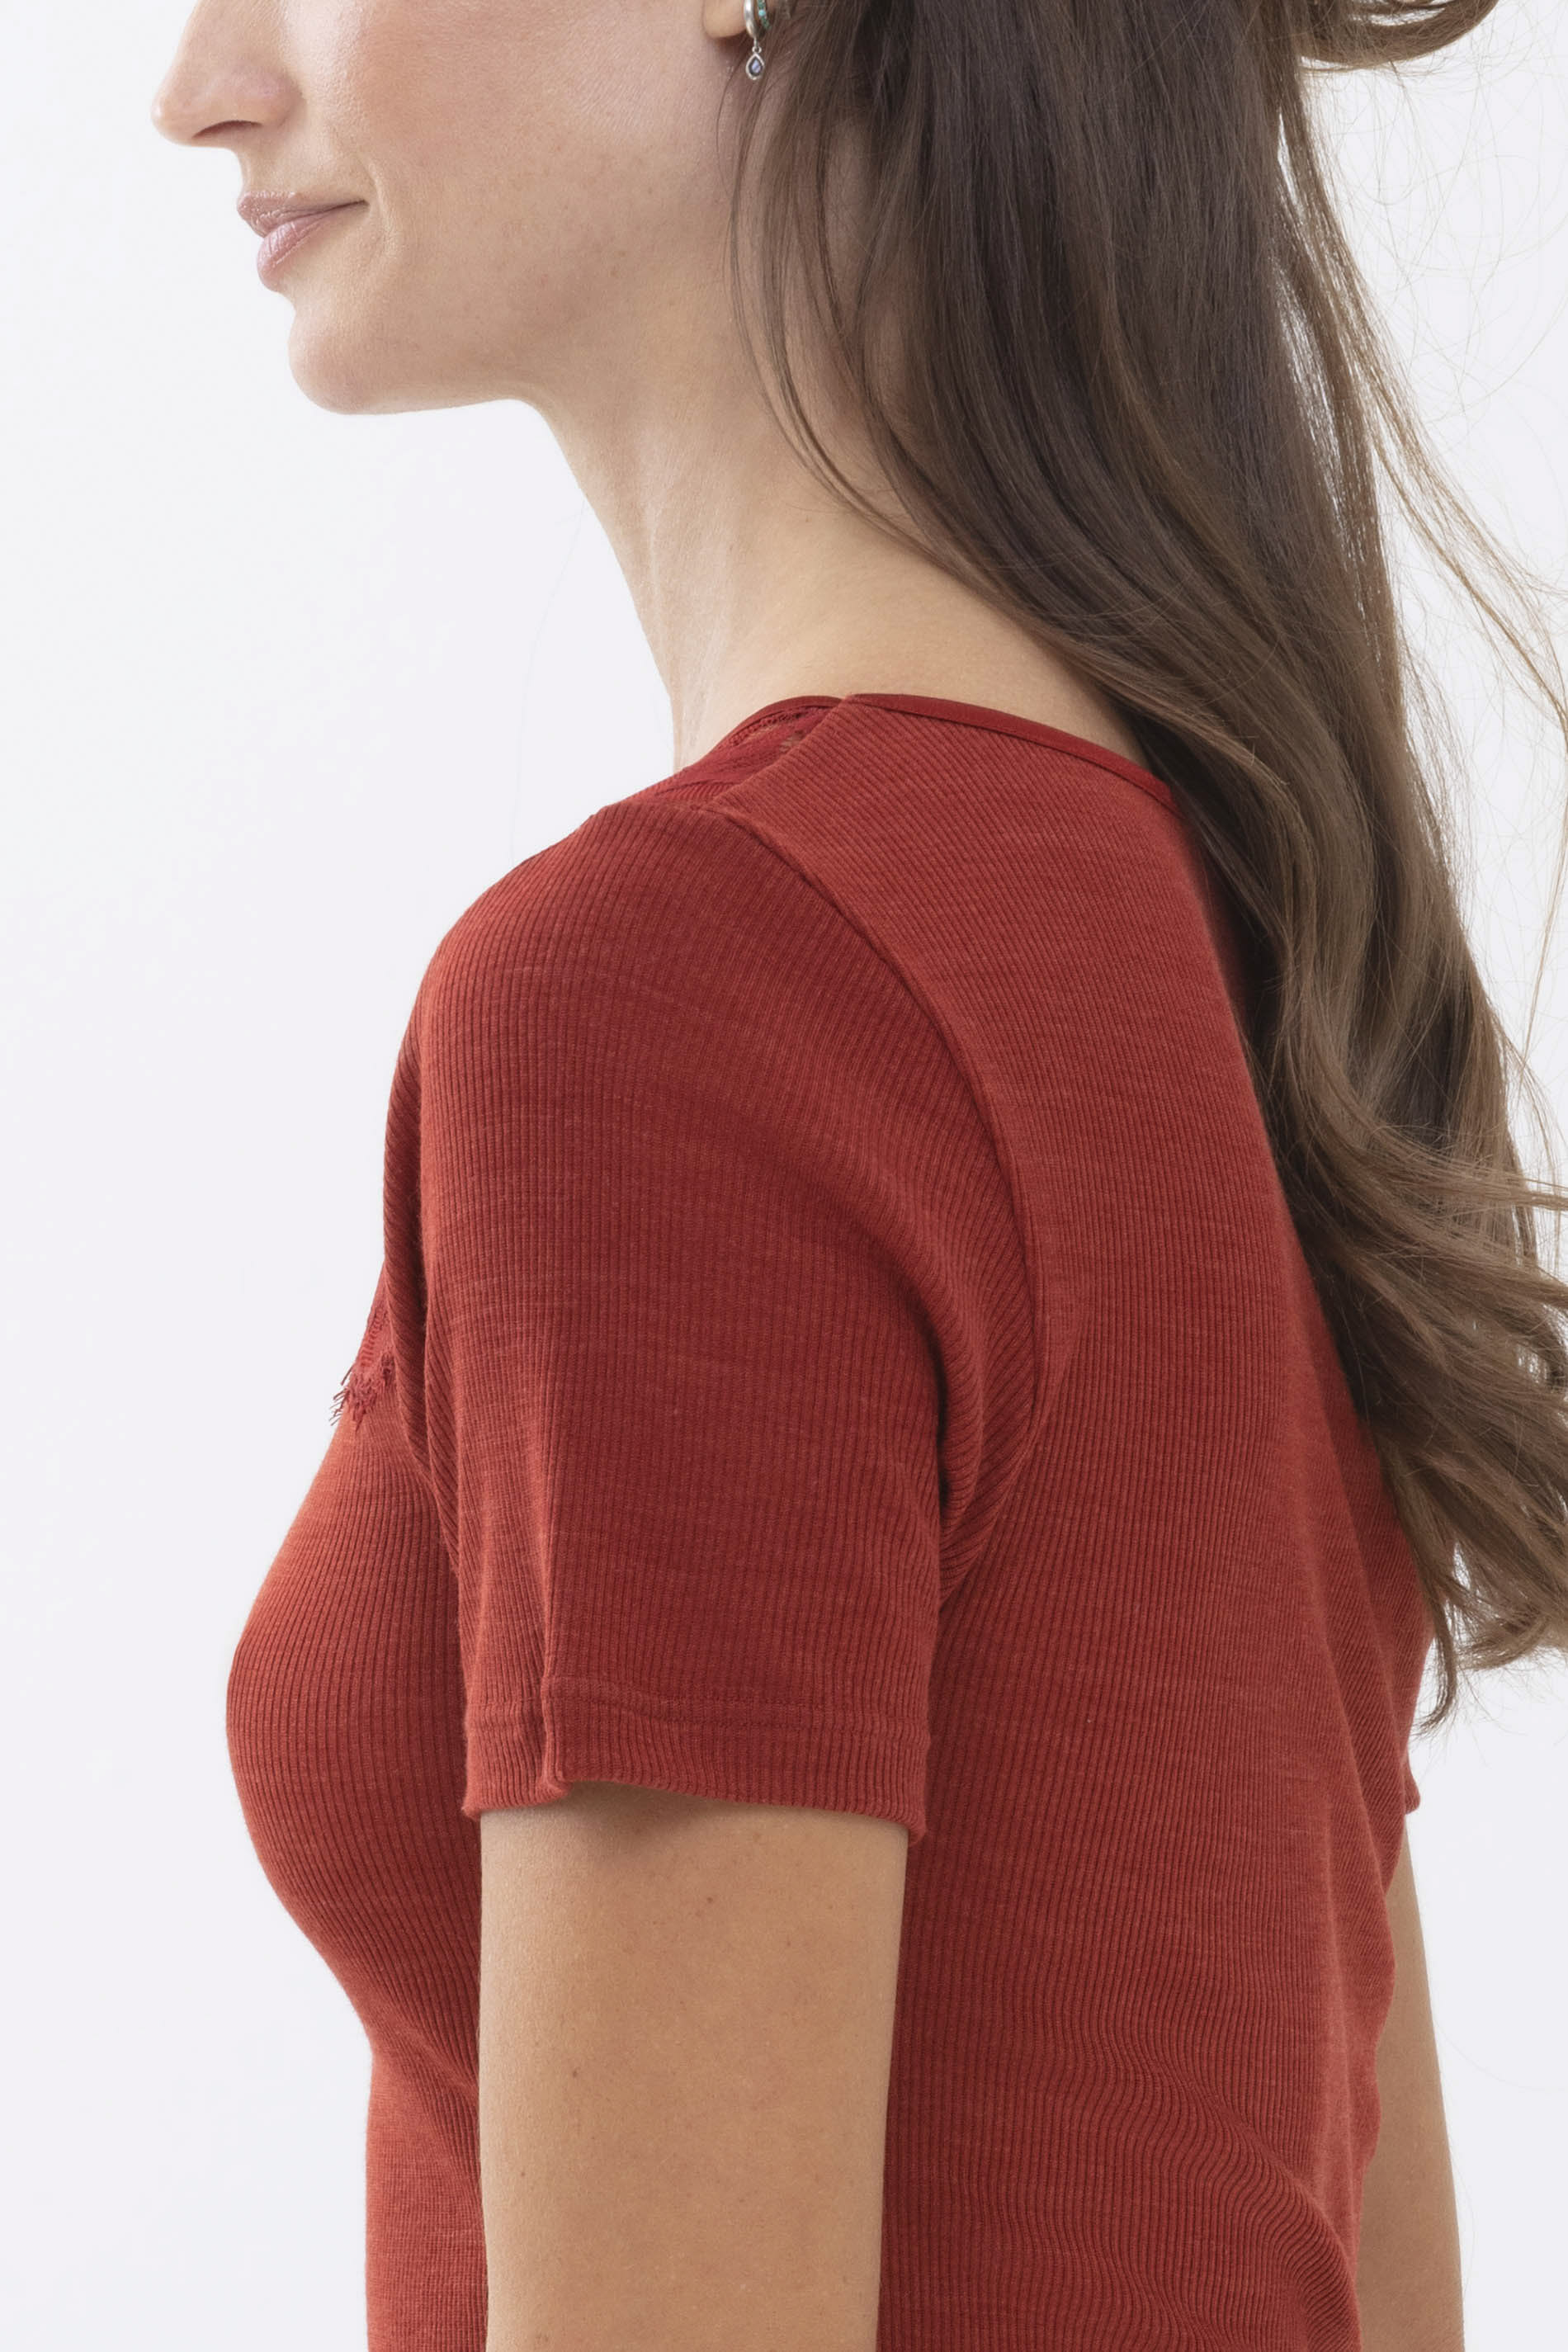 Kurzarm-Shirt Red Pepper Serie Amazing Silk Rib Detailansicht 02 | mey®